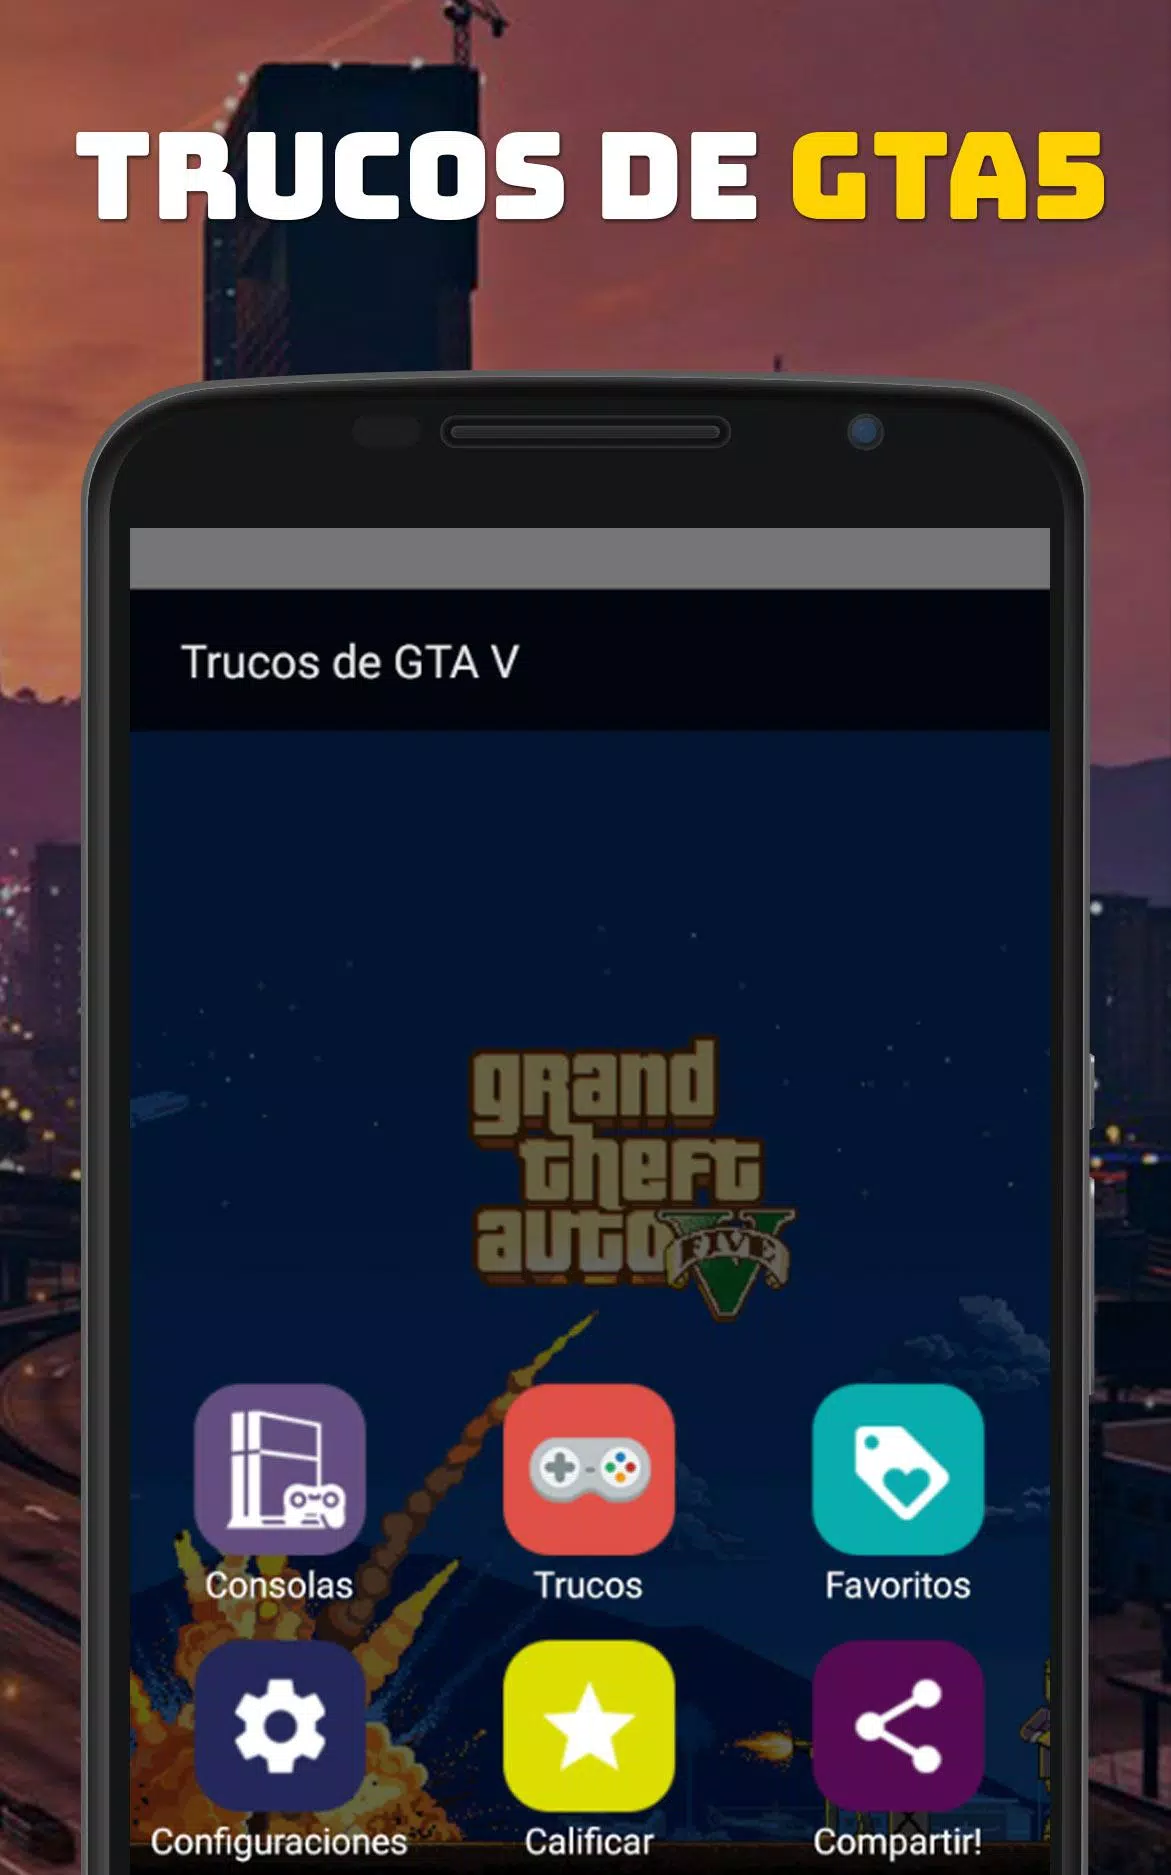 Trucos GTA 5 - Download do APK para Android